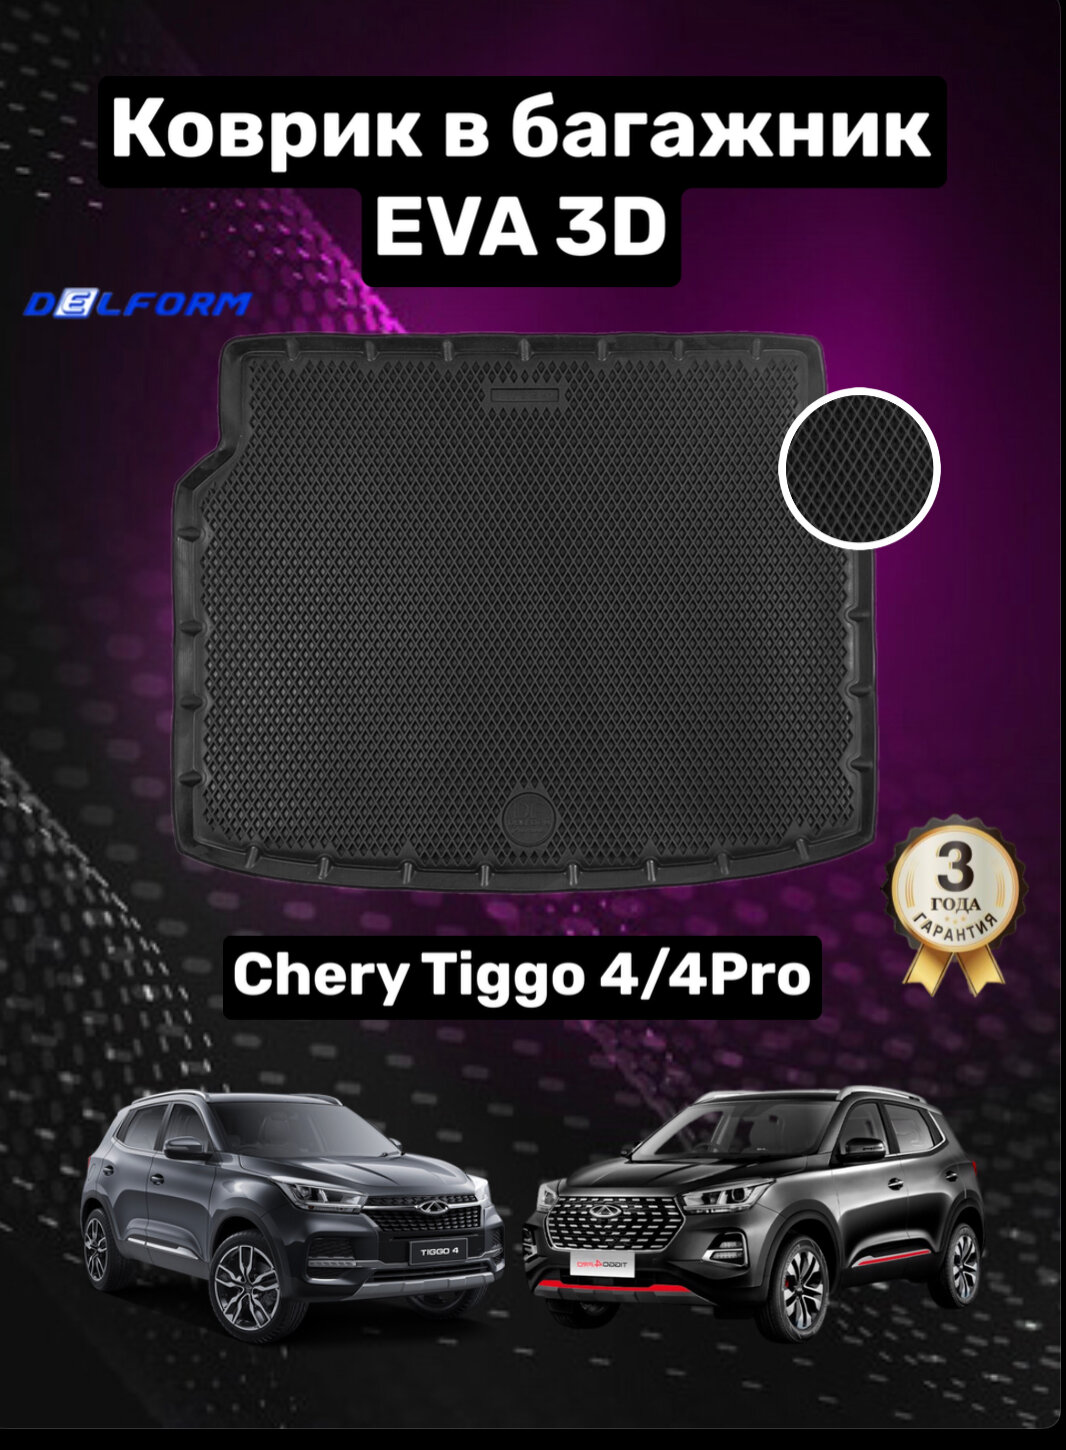 Эва/Eva/Ева коврик в багажник Черри Тигго 4/4Про /Chery Tiggo 4/4Pro (2017-) 3D Premium ТЭП Delform полиуретан